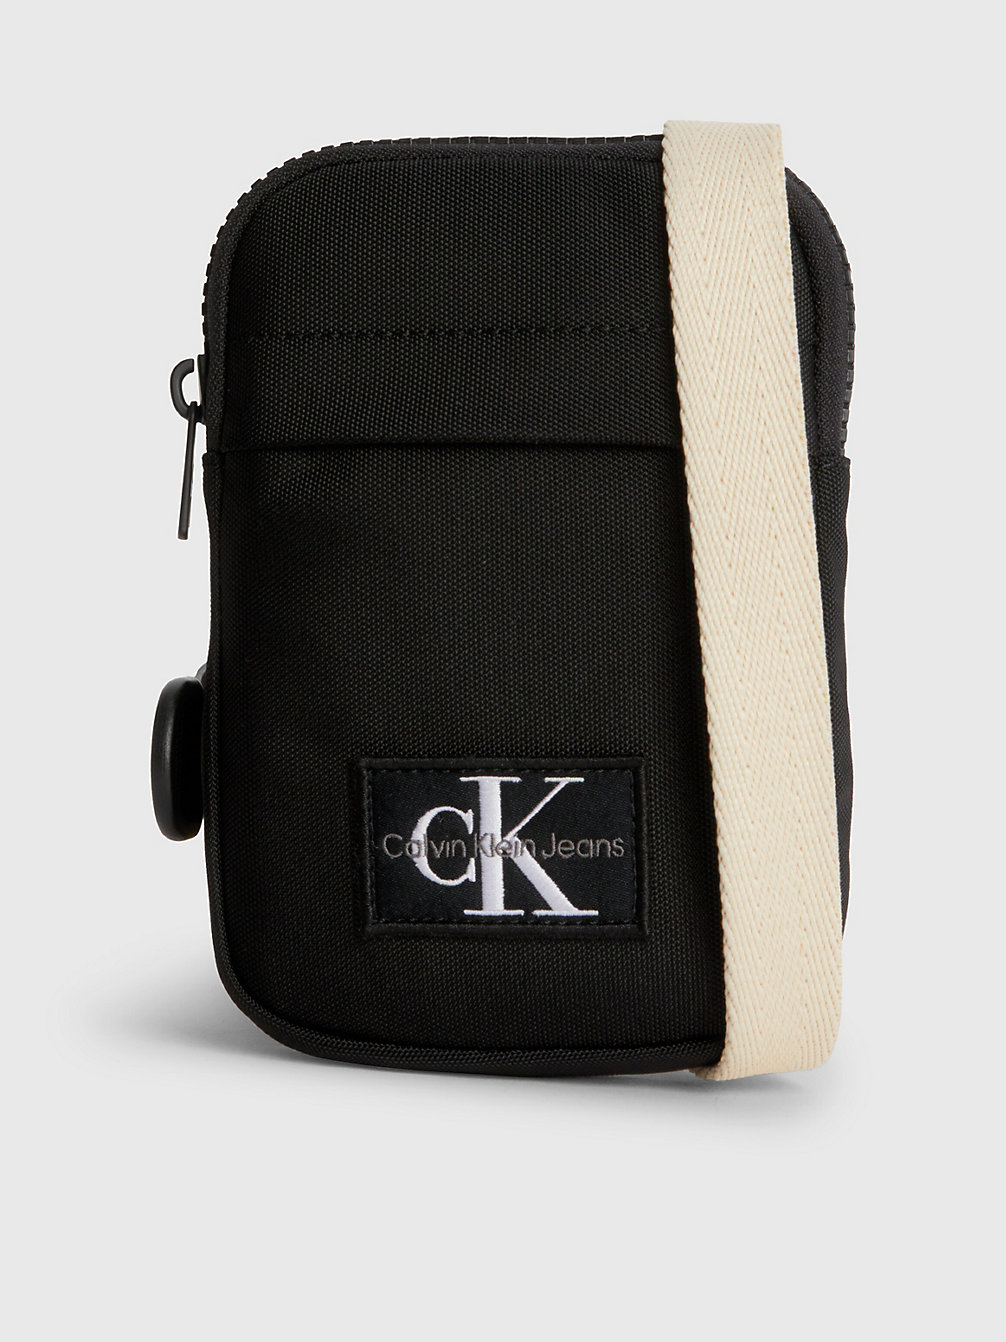 CK BLACK > Unisex-Logo-Crossover-Bag > undefined kids unisex - Calvin Klein